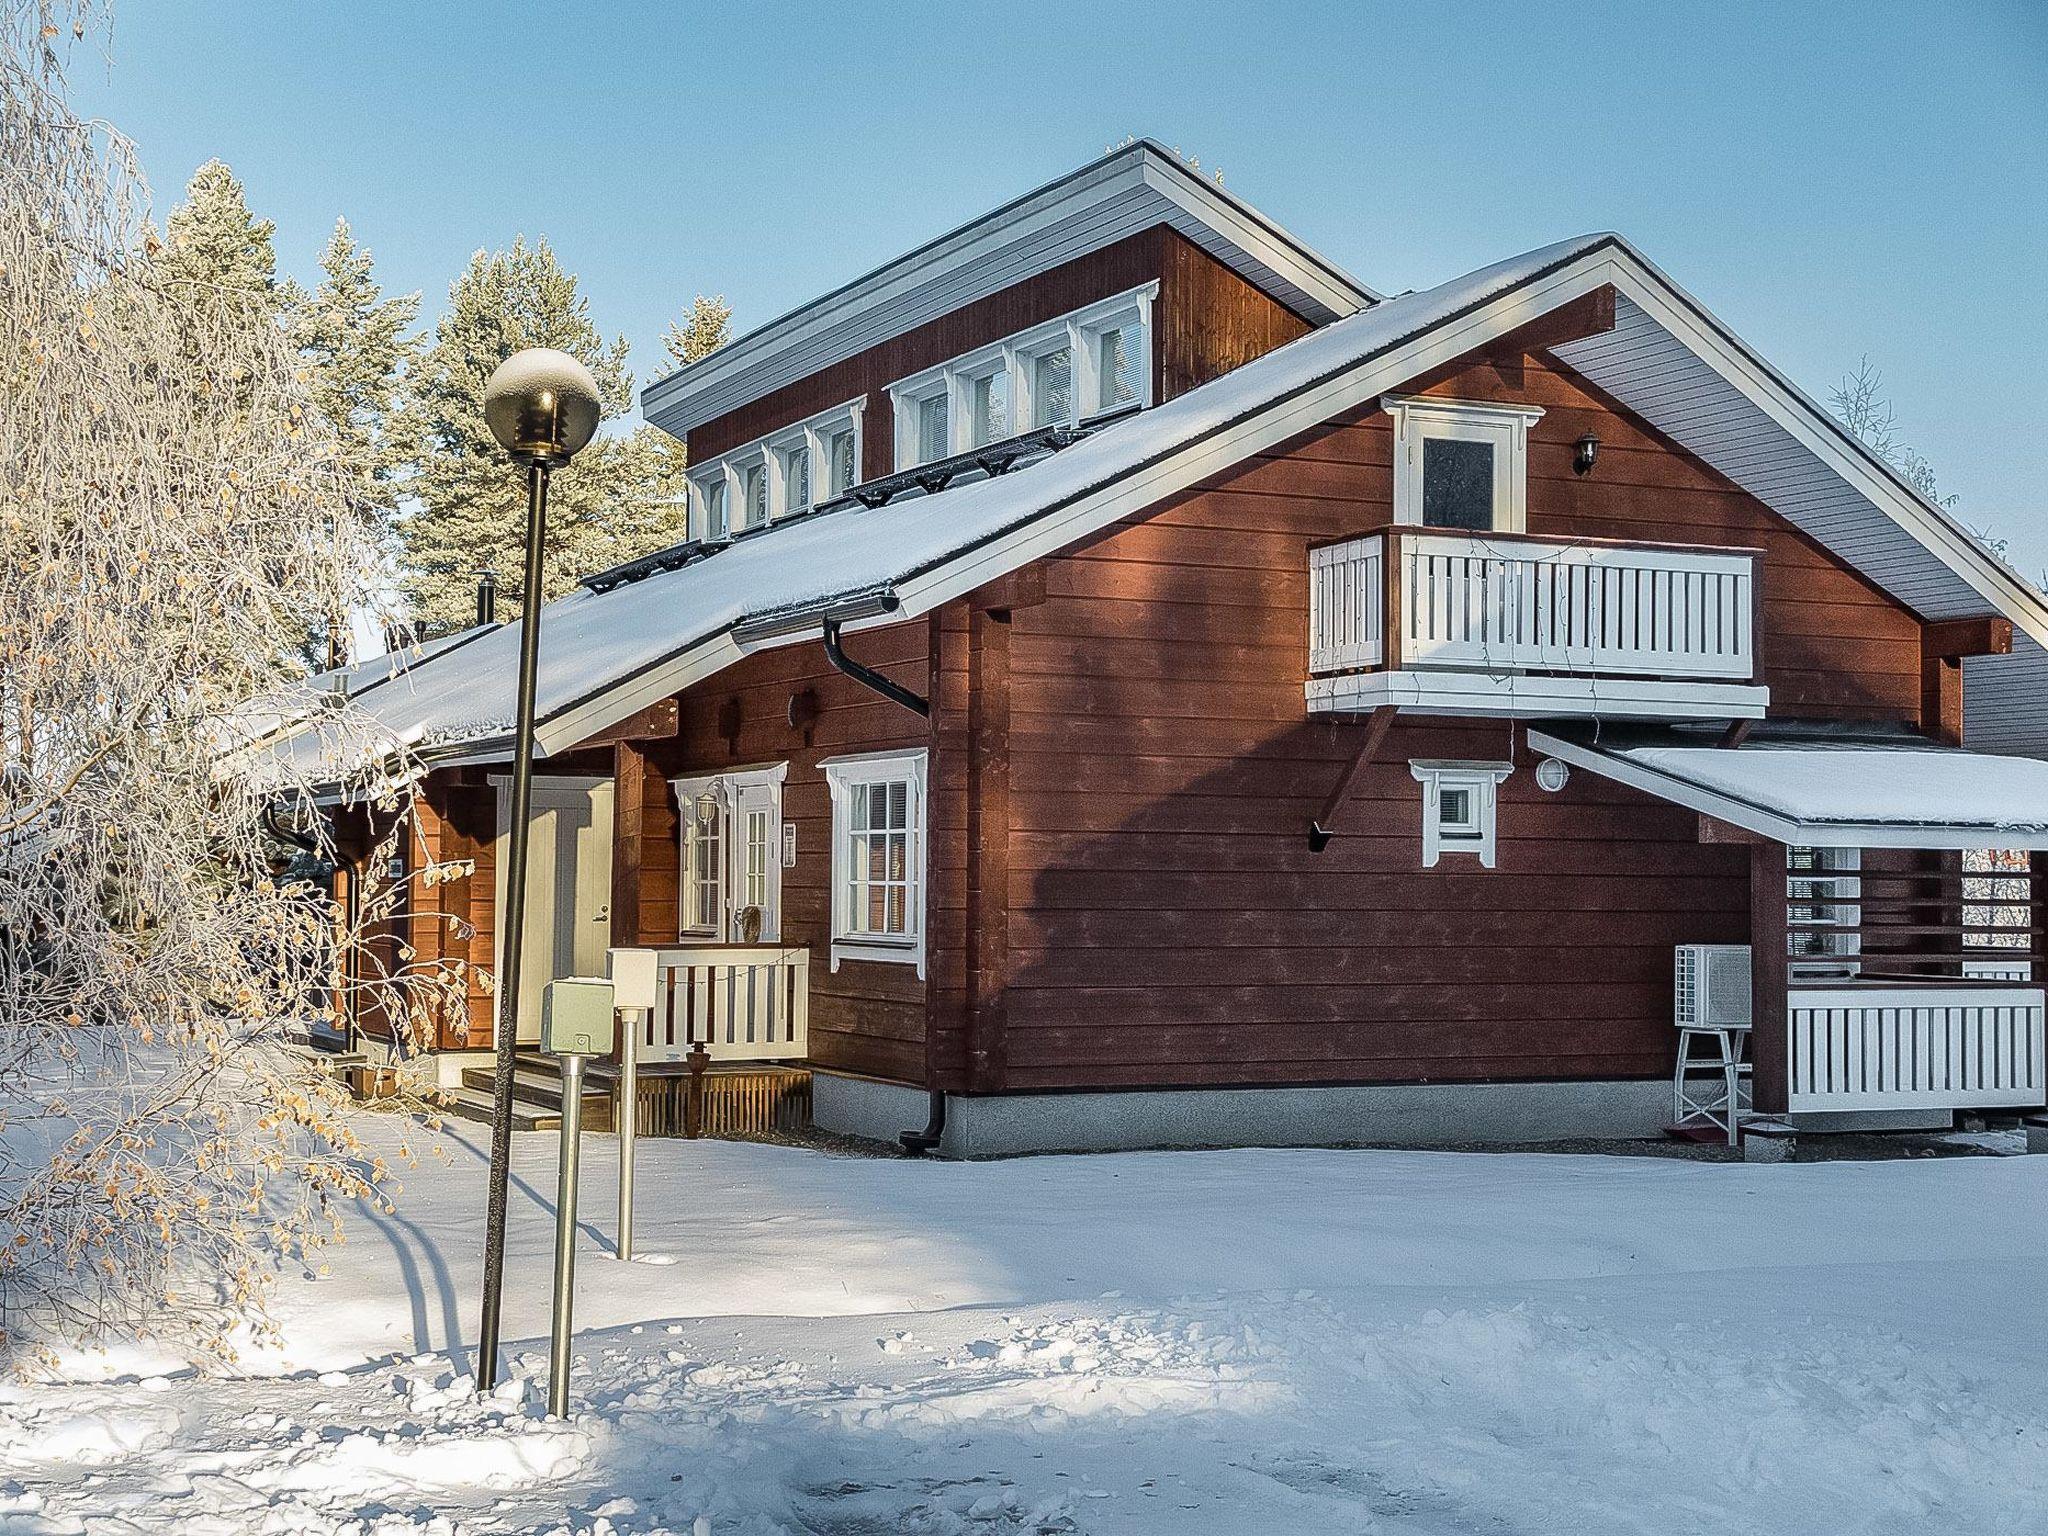 Photo 1 - 3 bedroom House in Kuopio with sauna